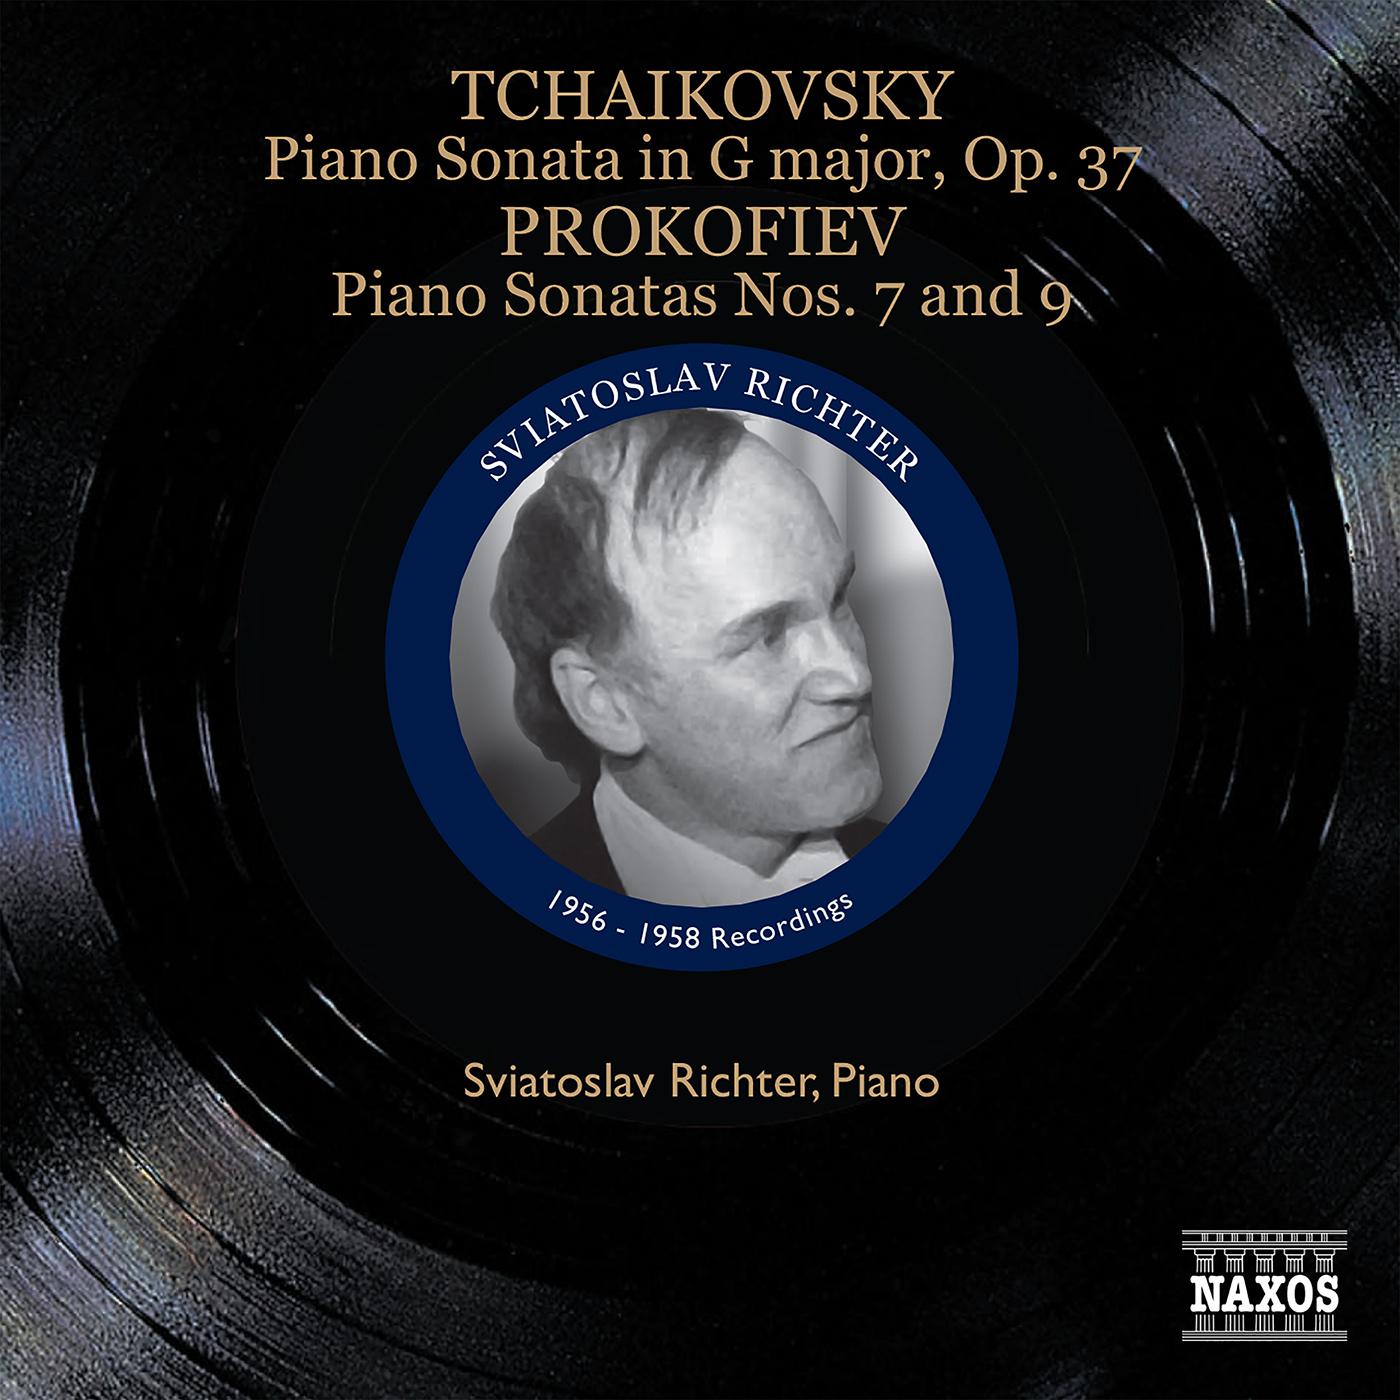 RICHTER, Sviatoslav: Early Recordings, Vol. 2 (1956-1958)